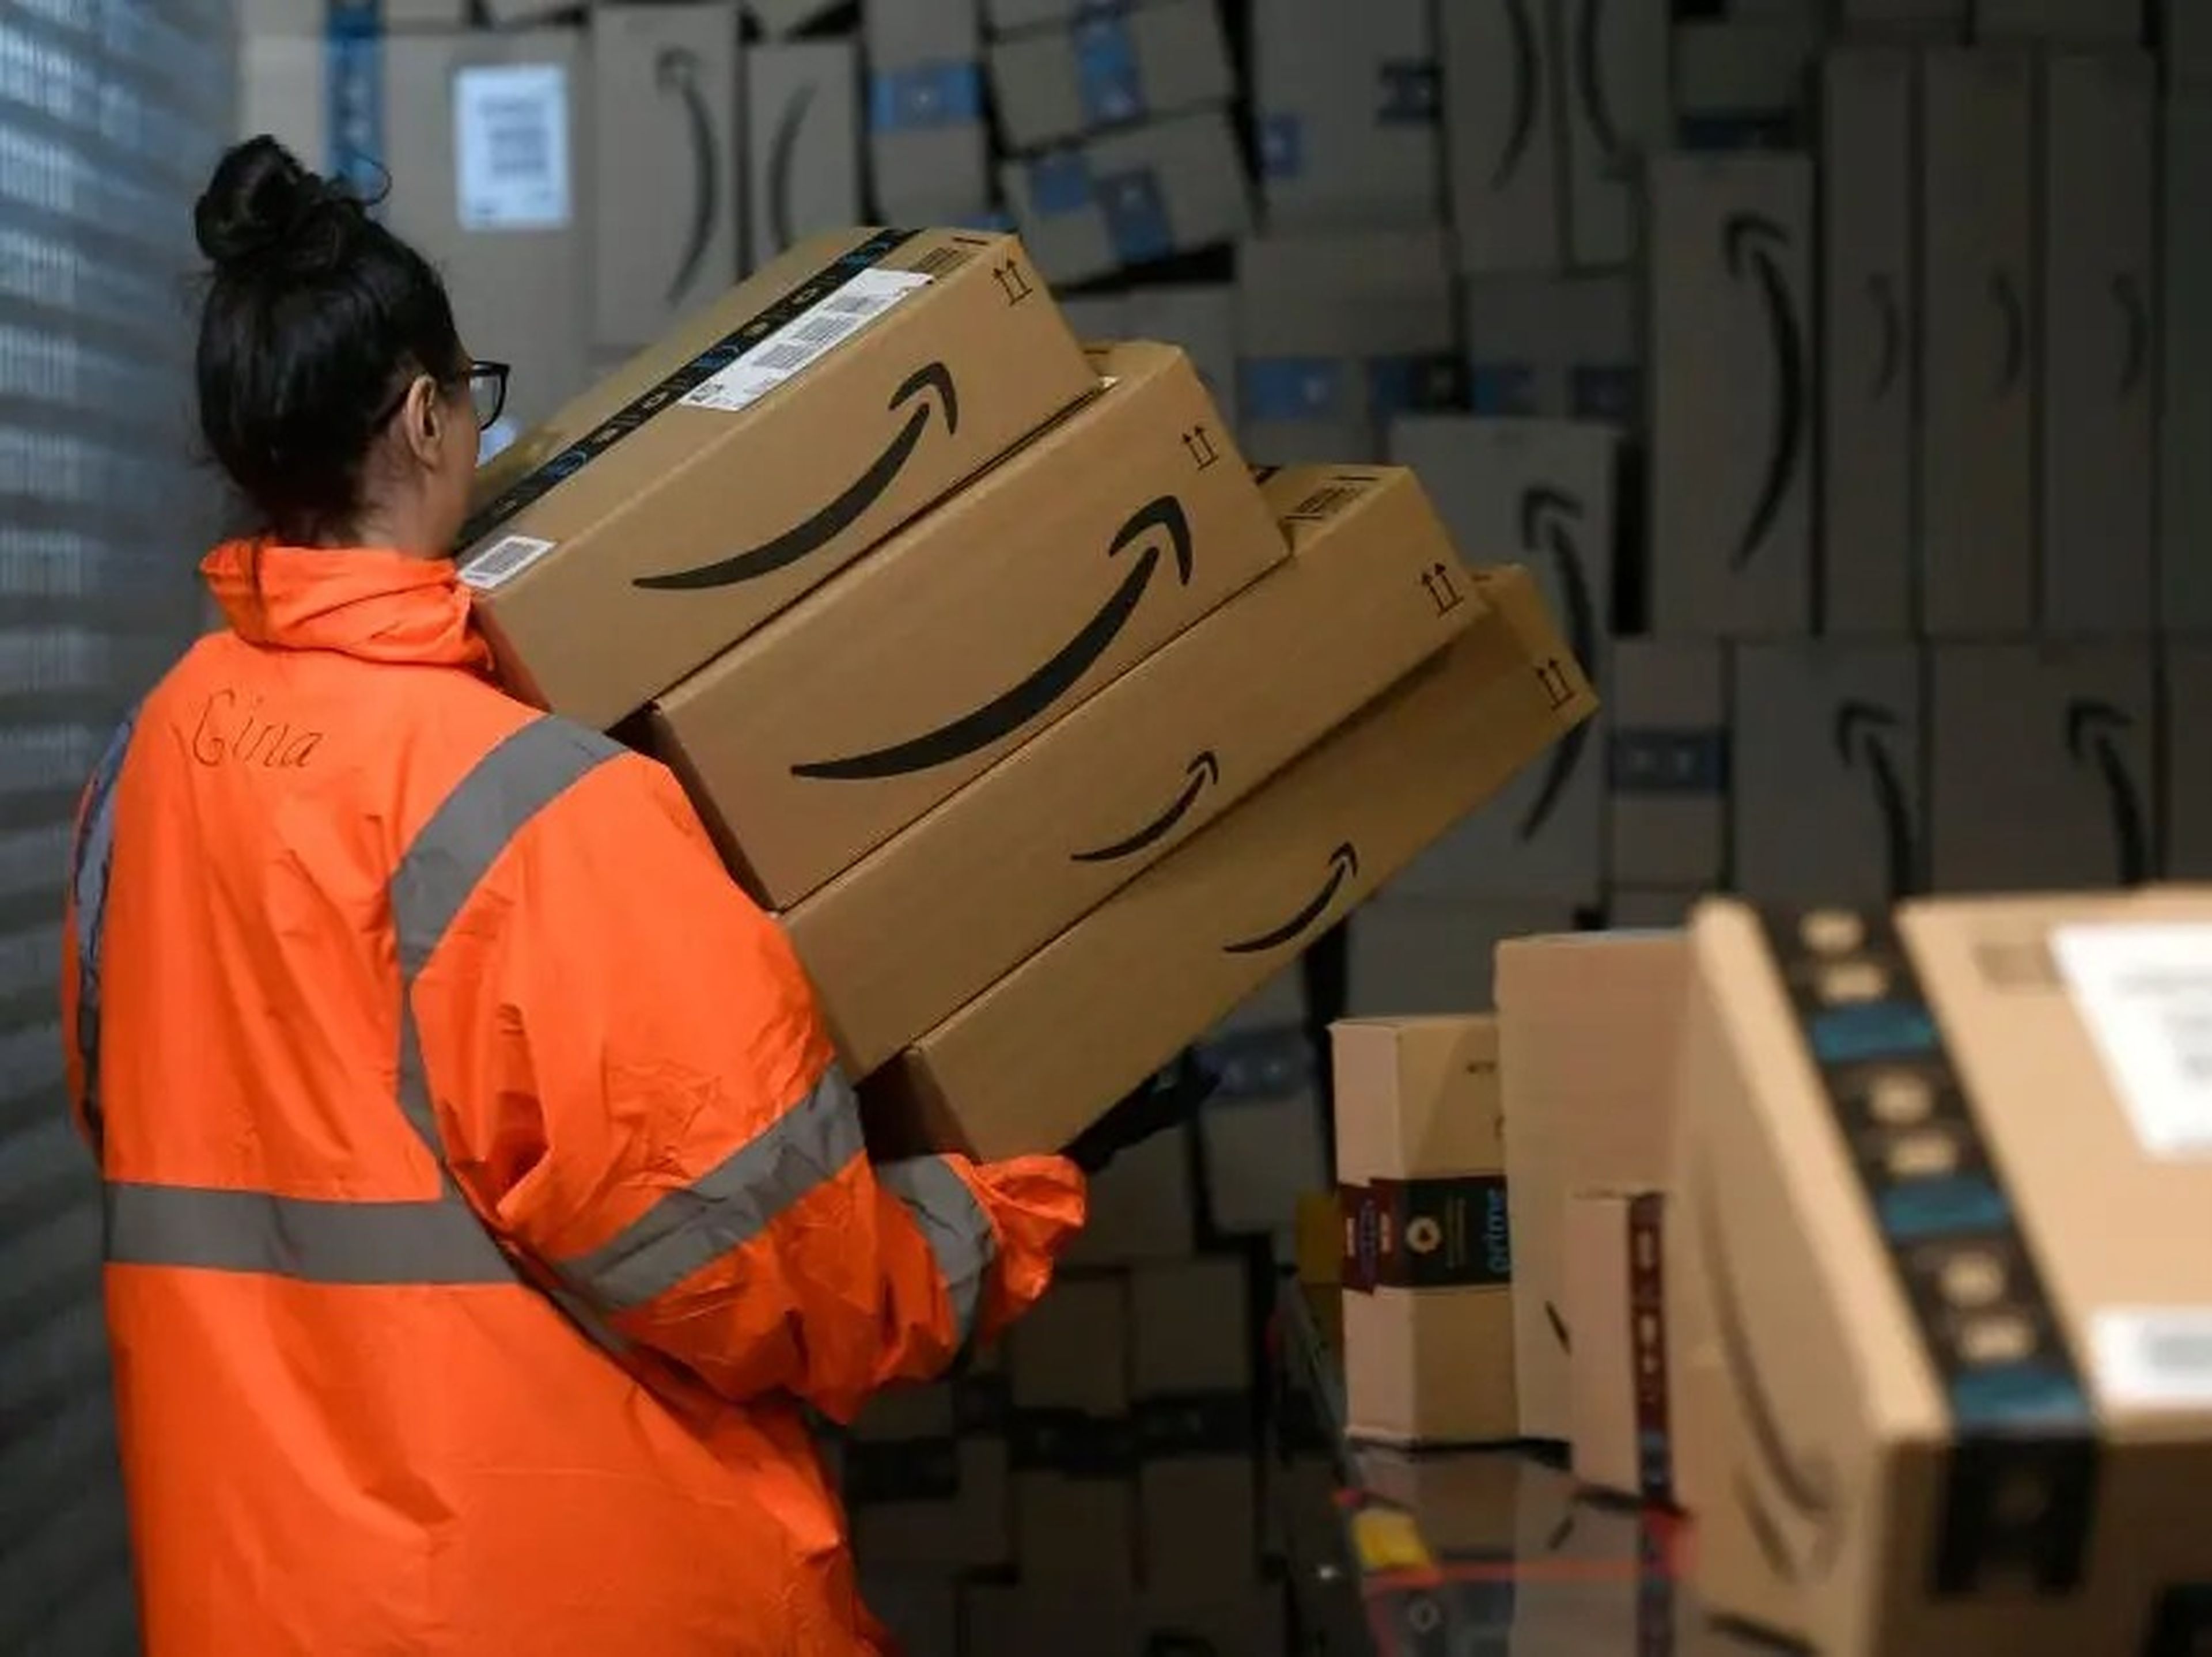 Amazon warehouse staff